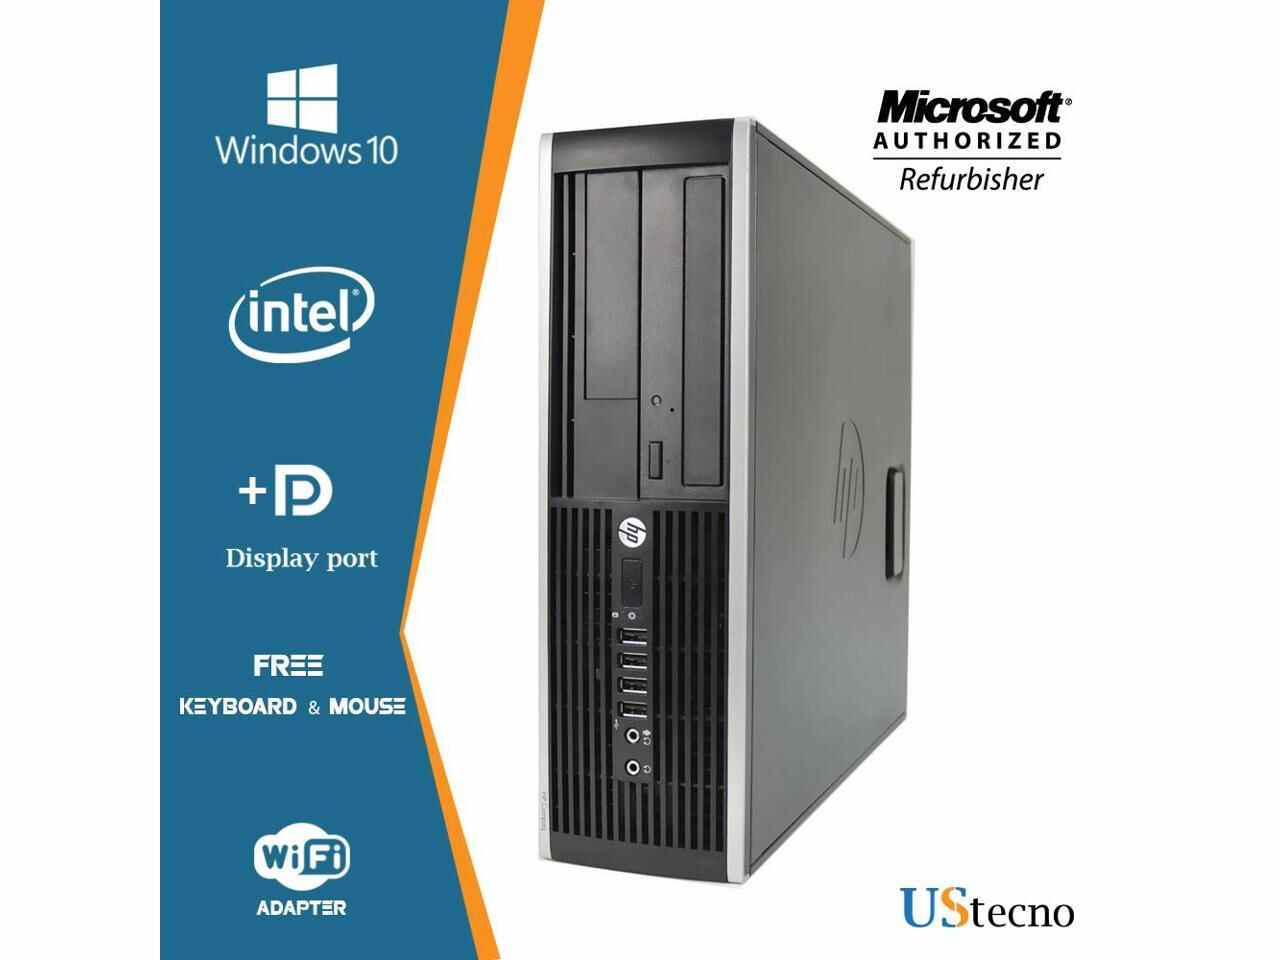 HP 6300 Pro Desktop Computer Intel Core i7 3770 8GB 250GB HDD HDMI,WiFi, DVD, DP, VGA, USB 3.0,Windows 10 Pro 64 Bit-Multi Language-English/Spanish/French